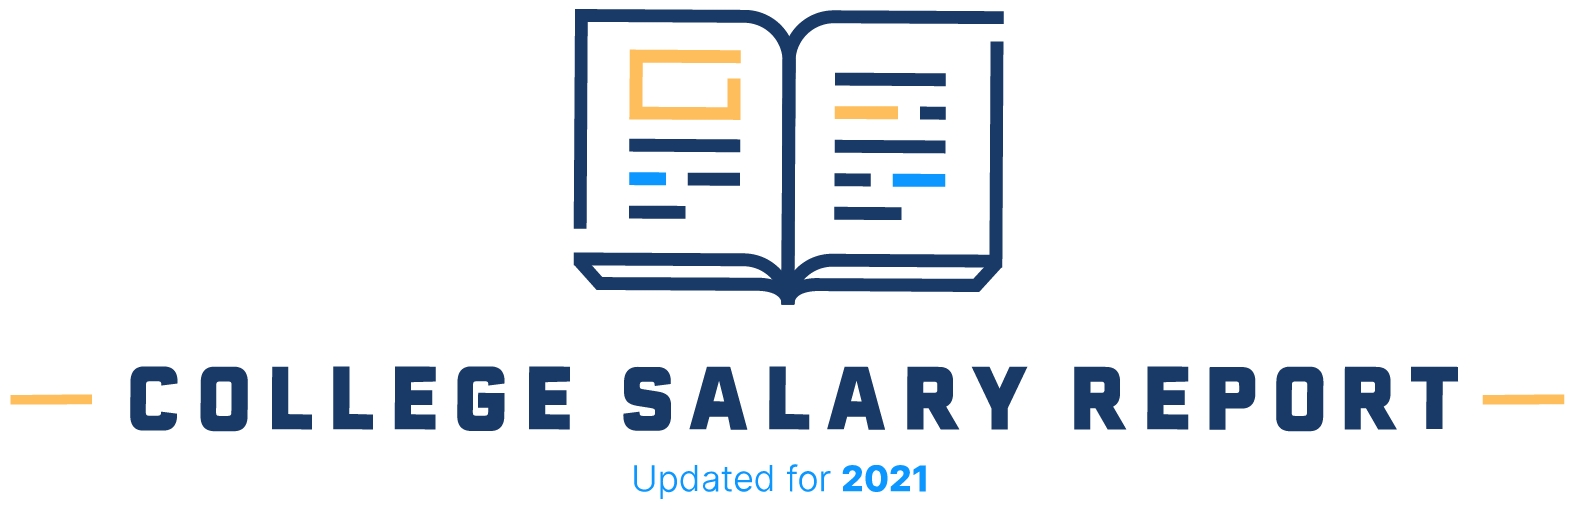 College Salary Report 2021 badge